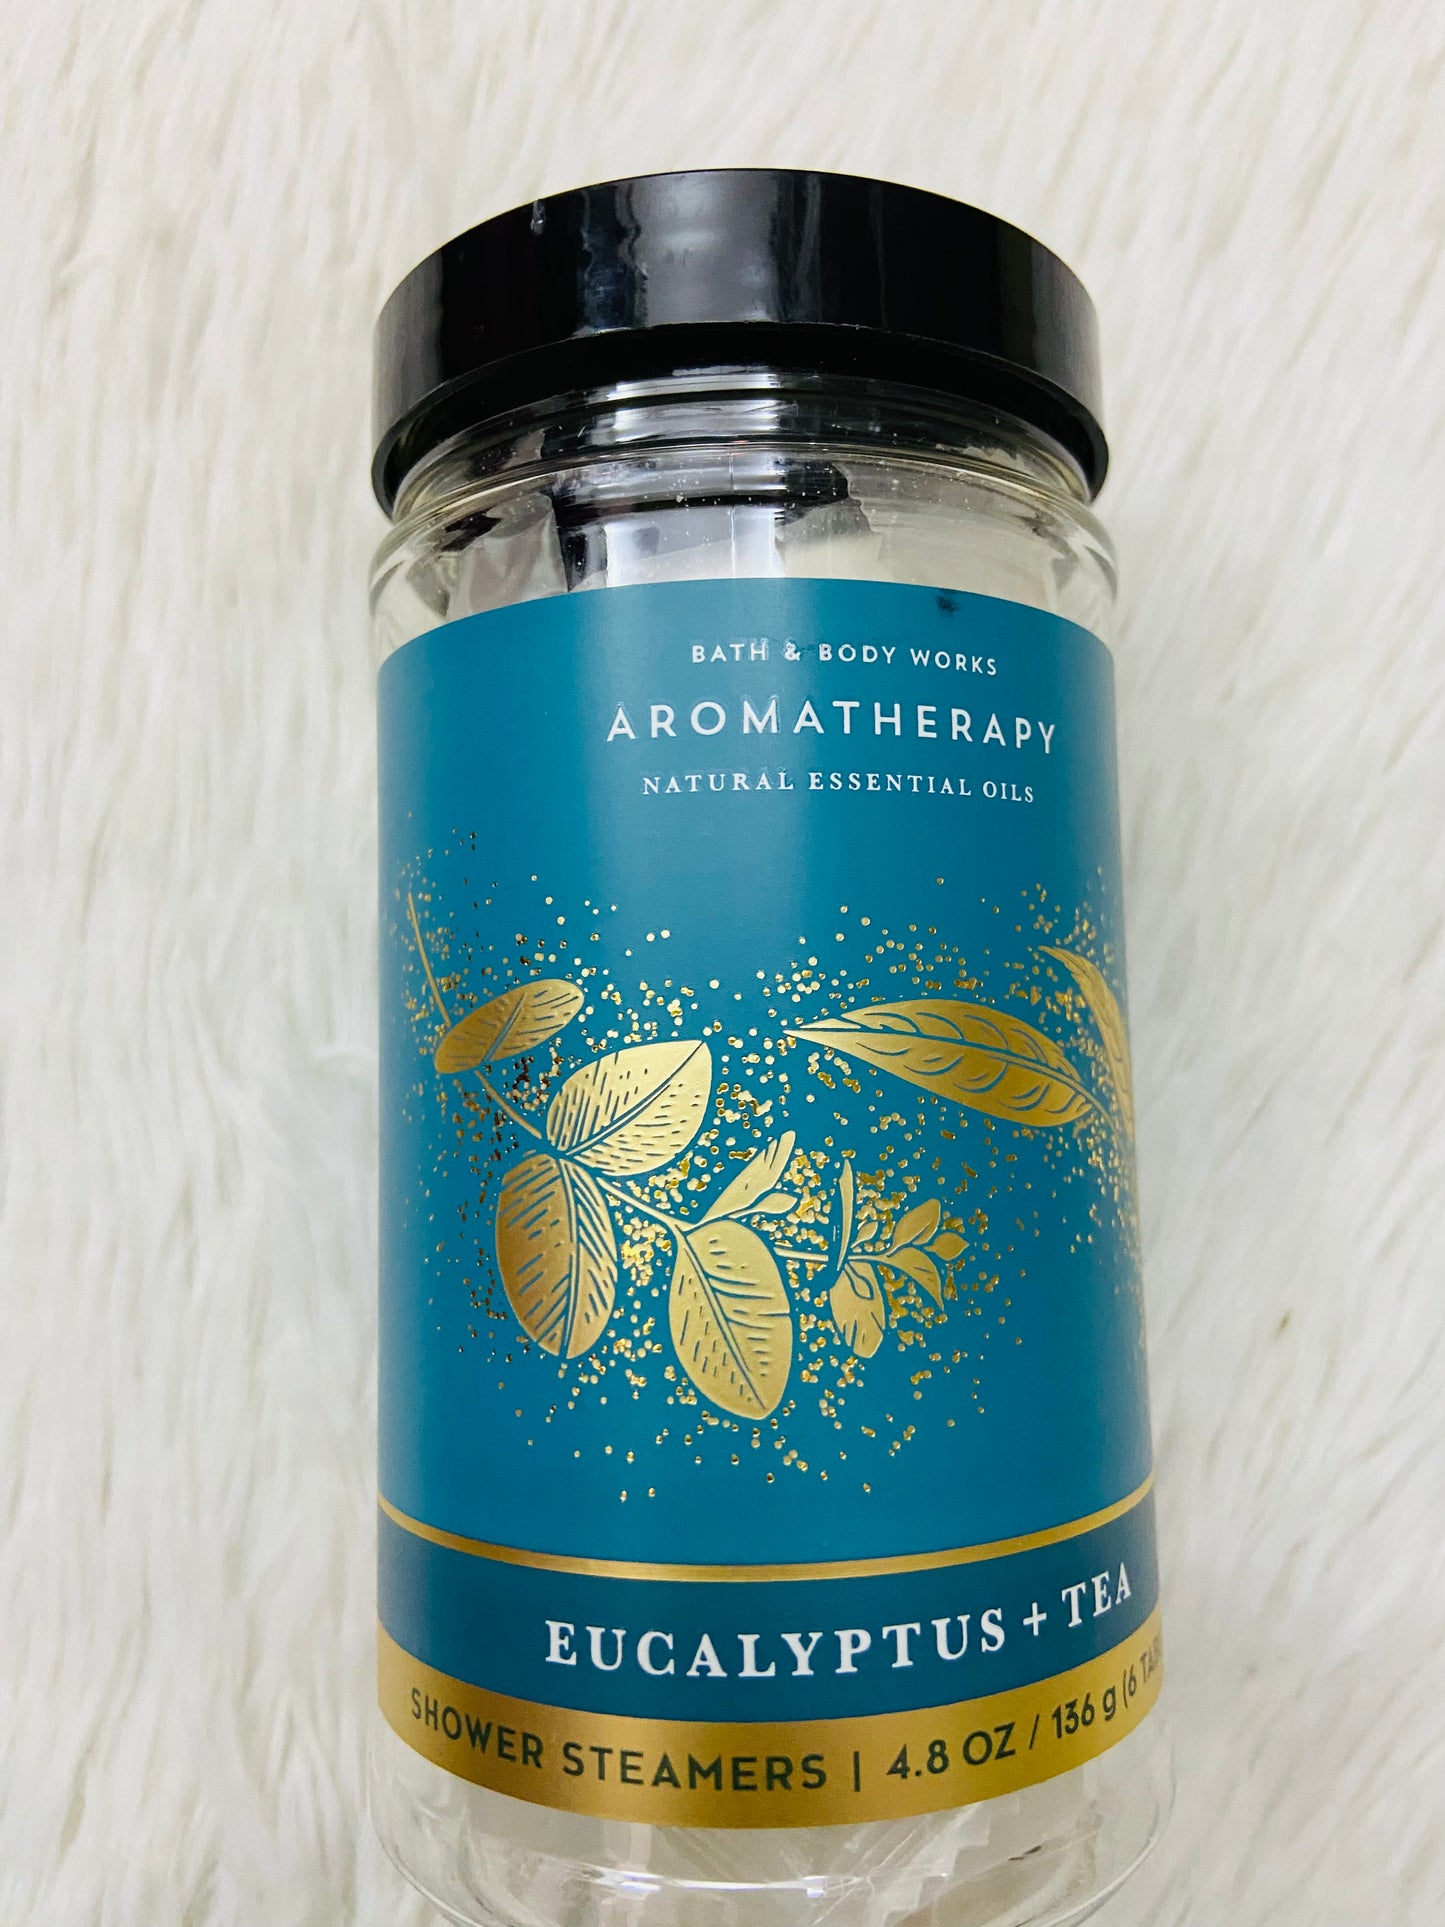 Bombas Aromáticas para ducha BATH & BODY WORKS ORIGINAL, aromatherapy con aceites naturales y esenciales eucalipto y té Eucalyptus + tea, 6 tabletas.